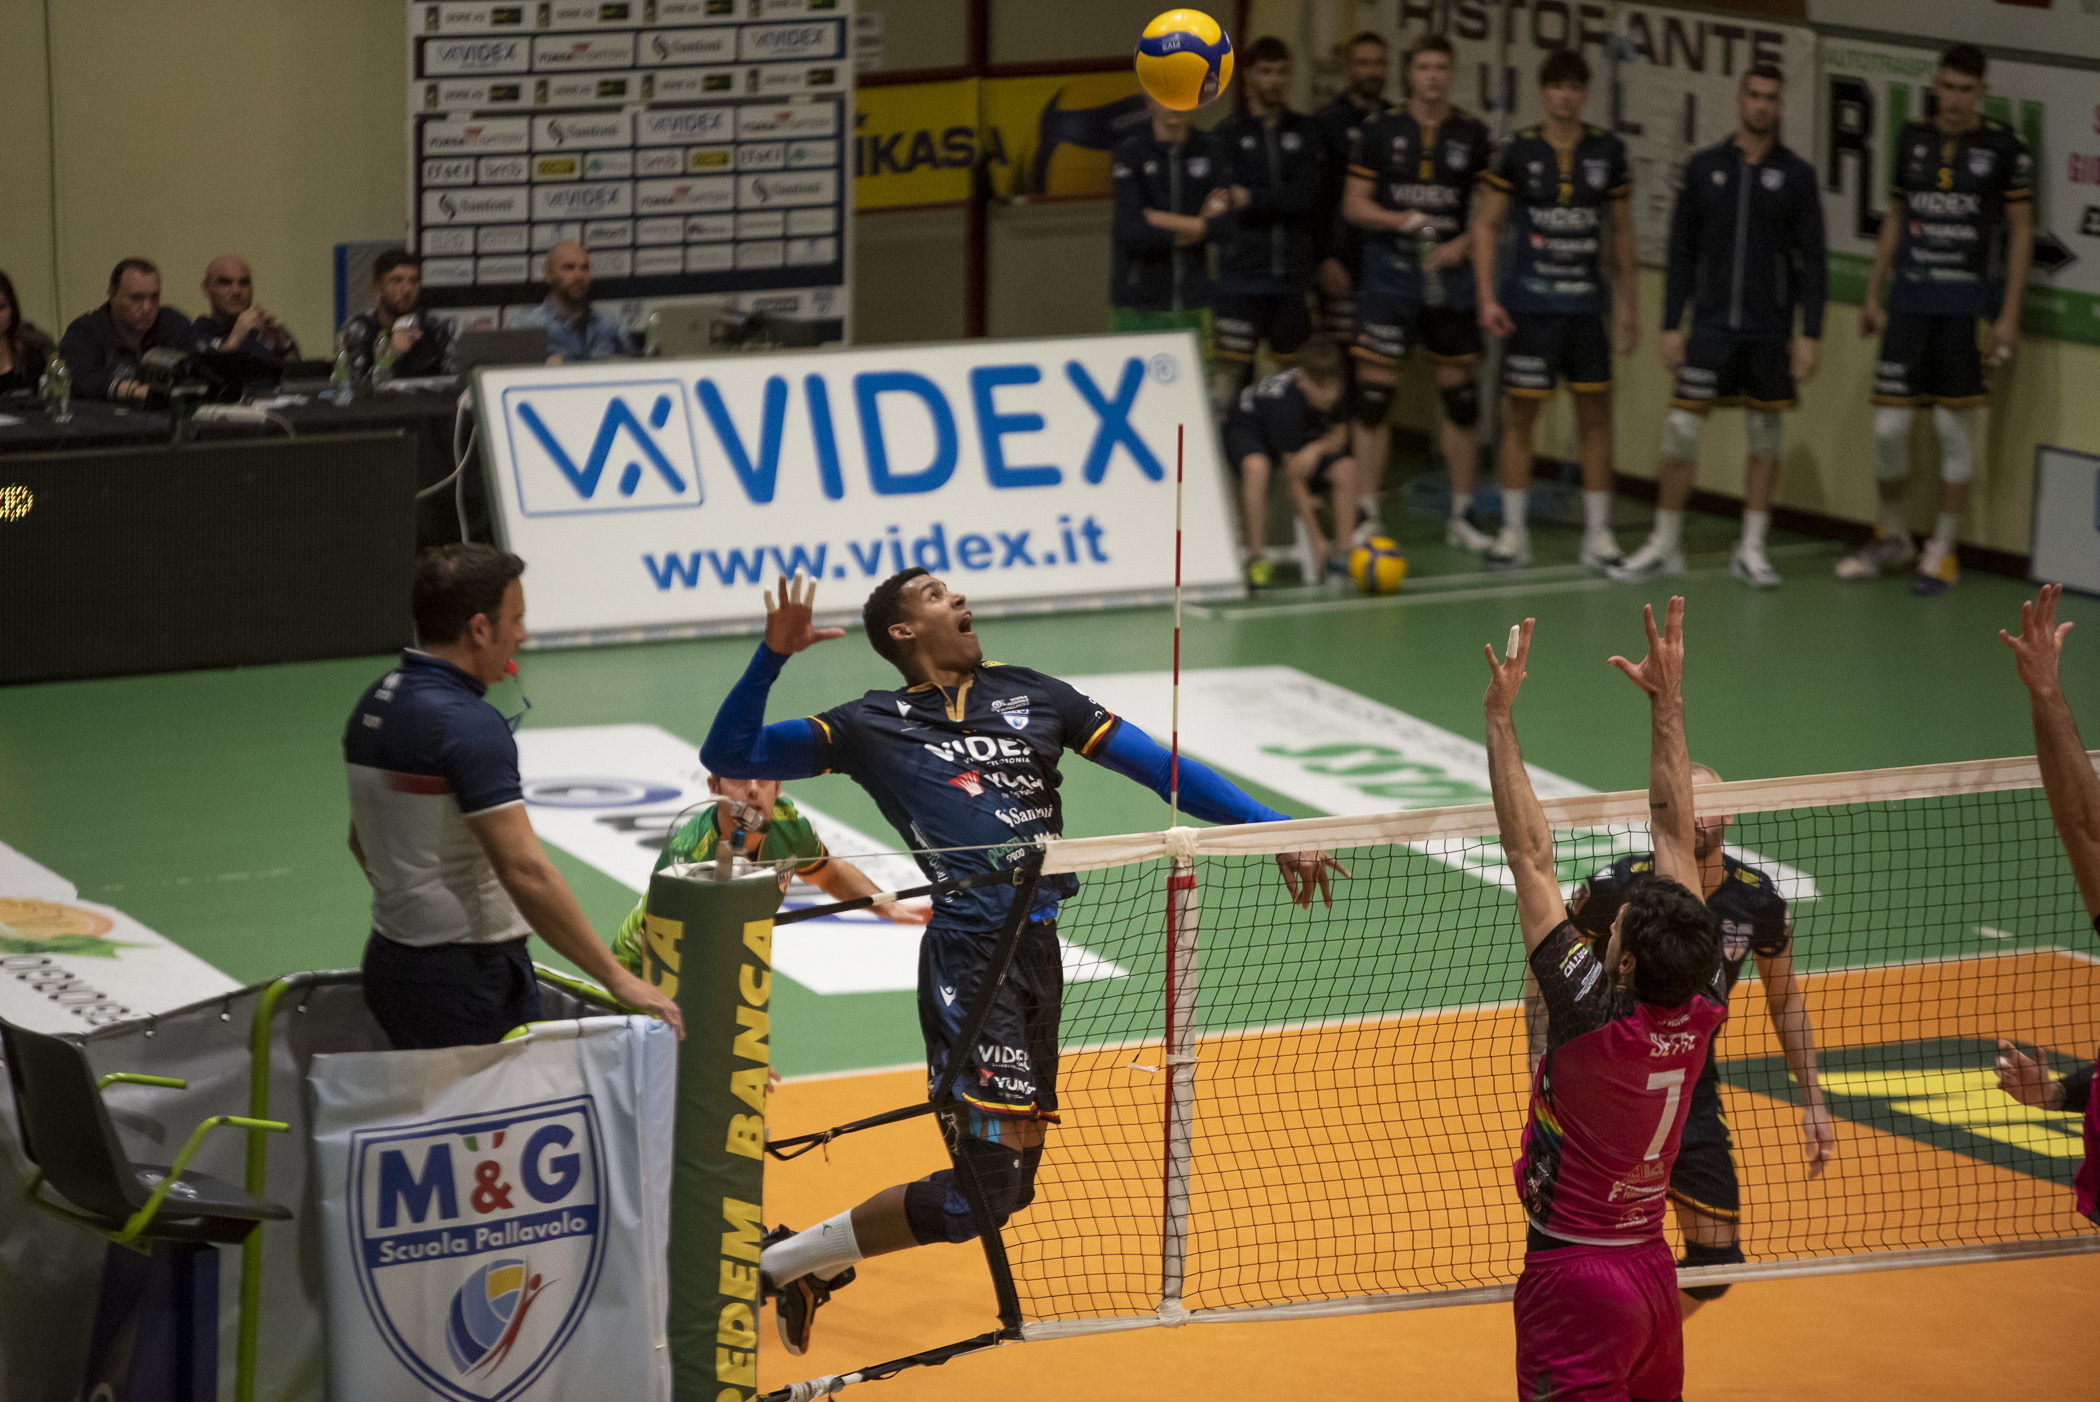 Volley, Videx ko in casa contro la Delta Group Porto Viro